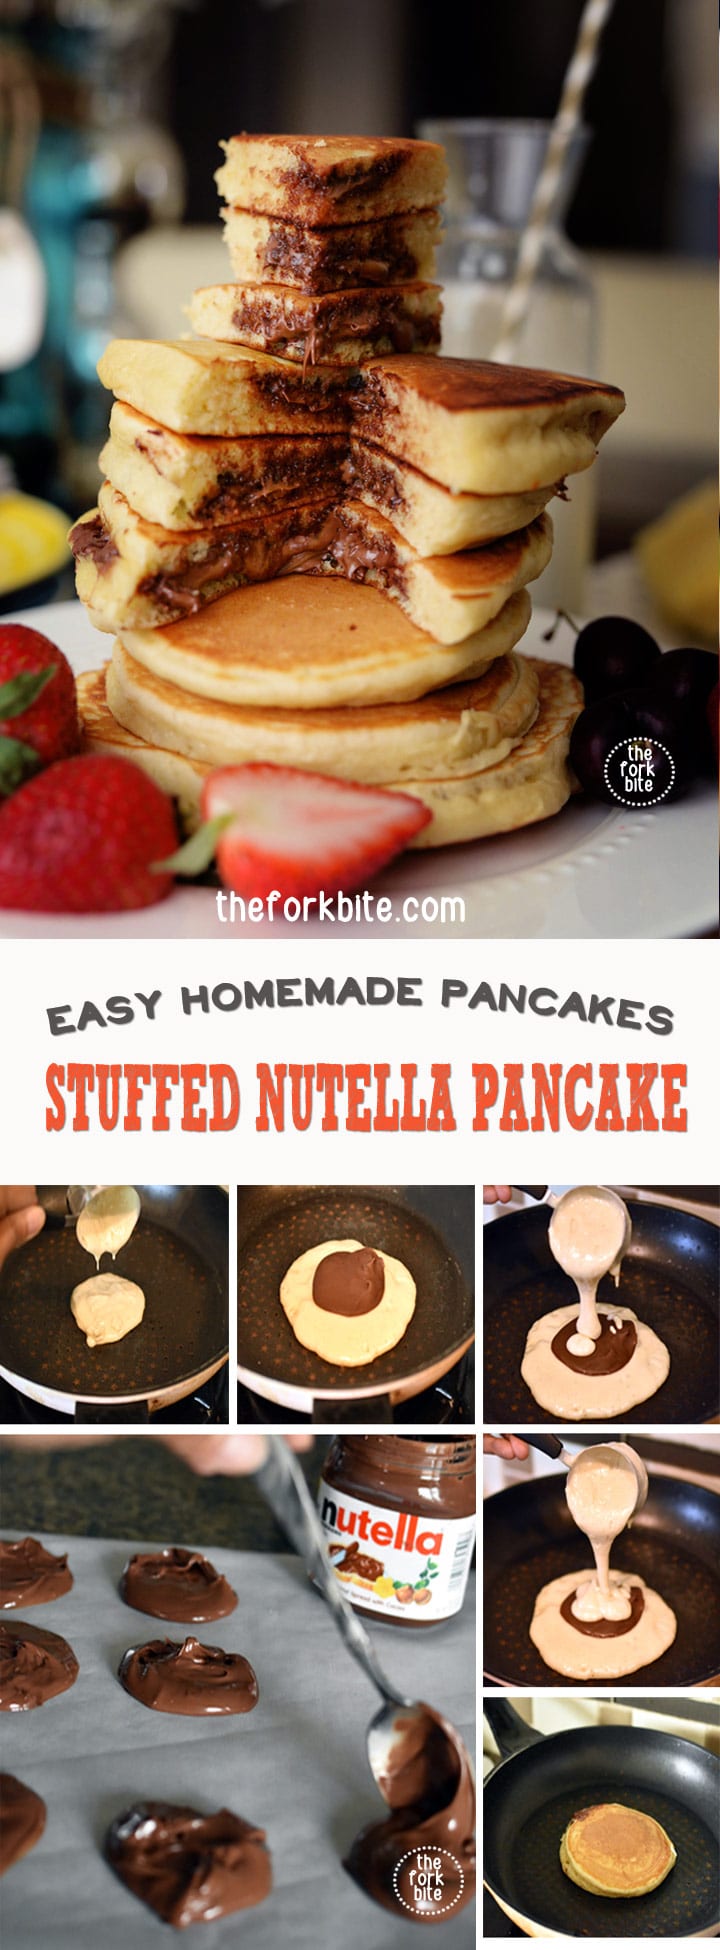 Stuffed Nutella Pancake - so easy to make